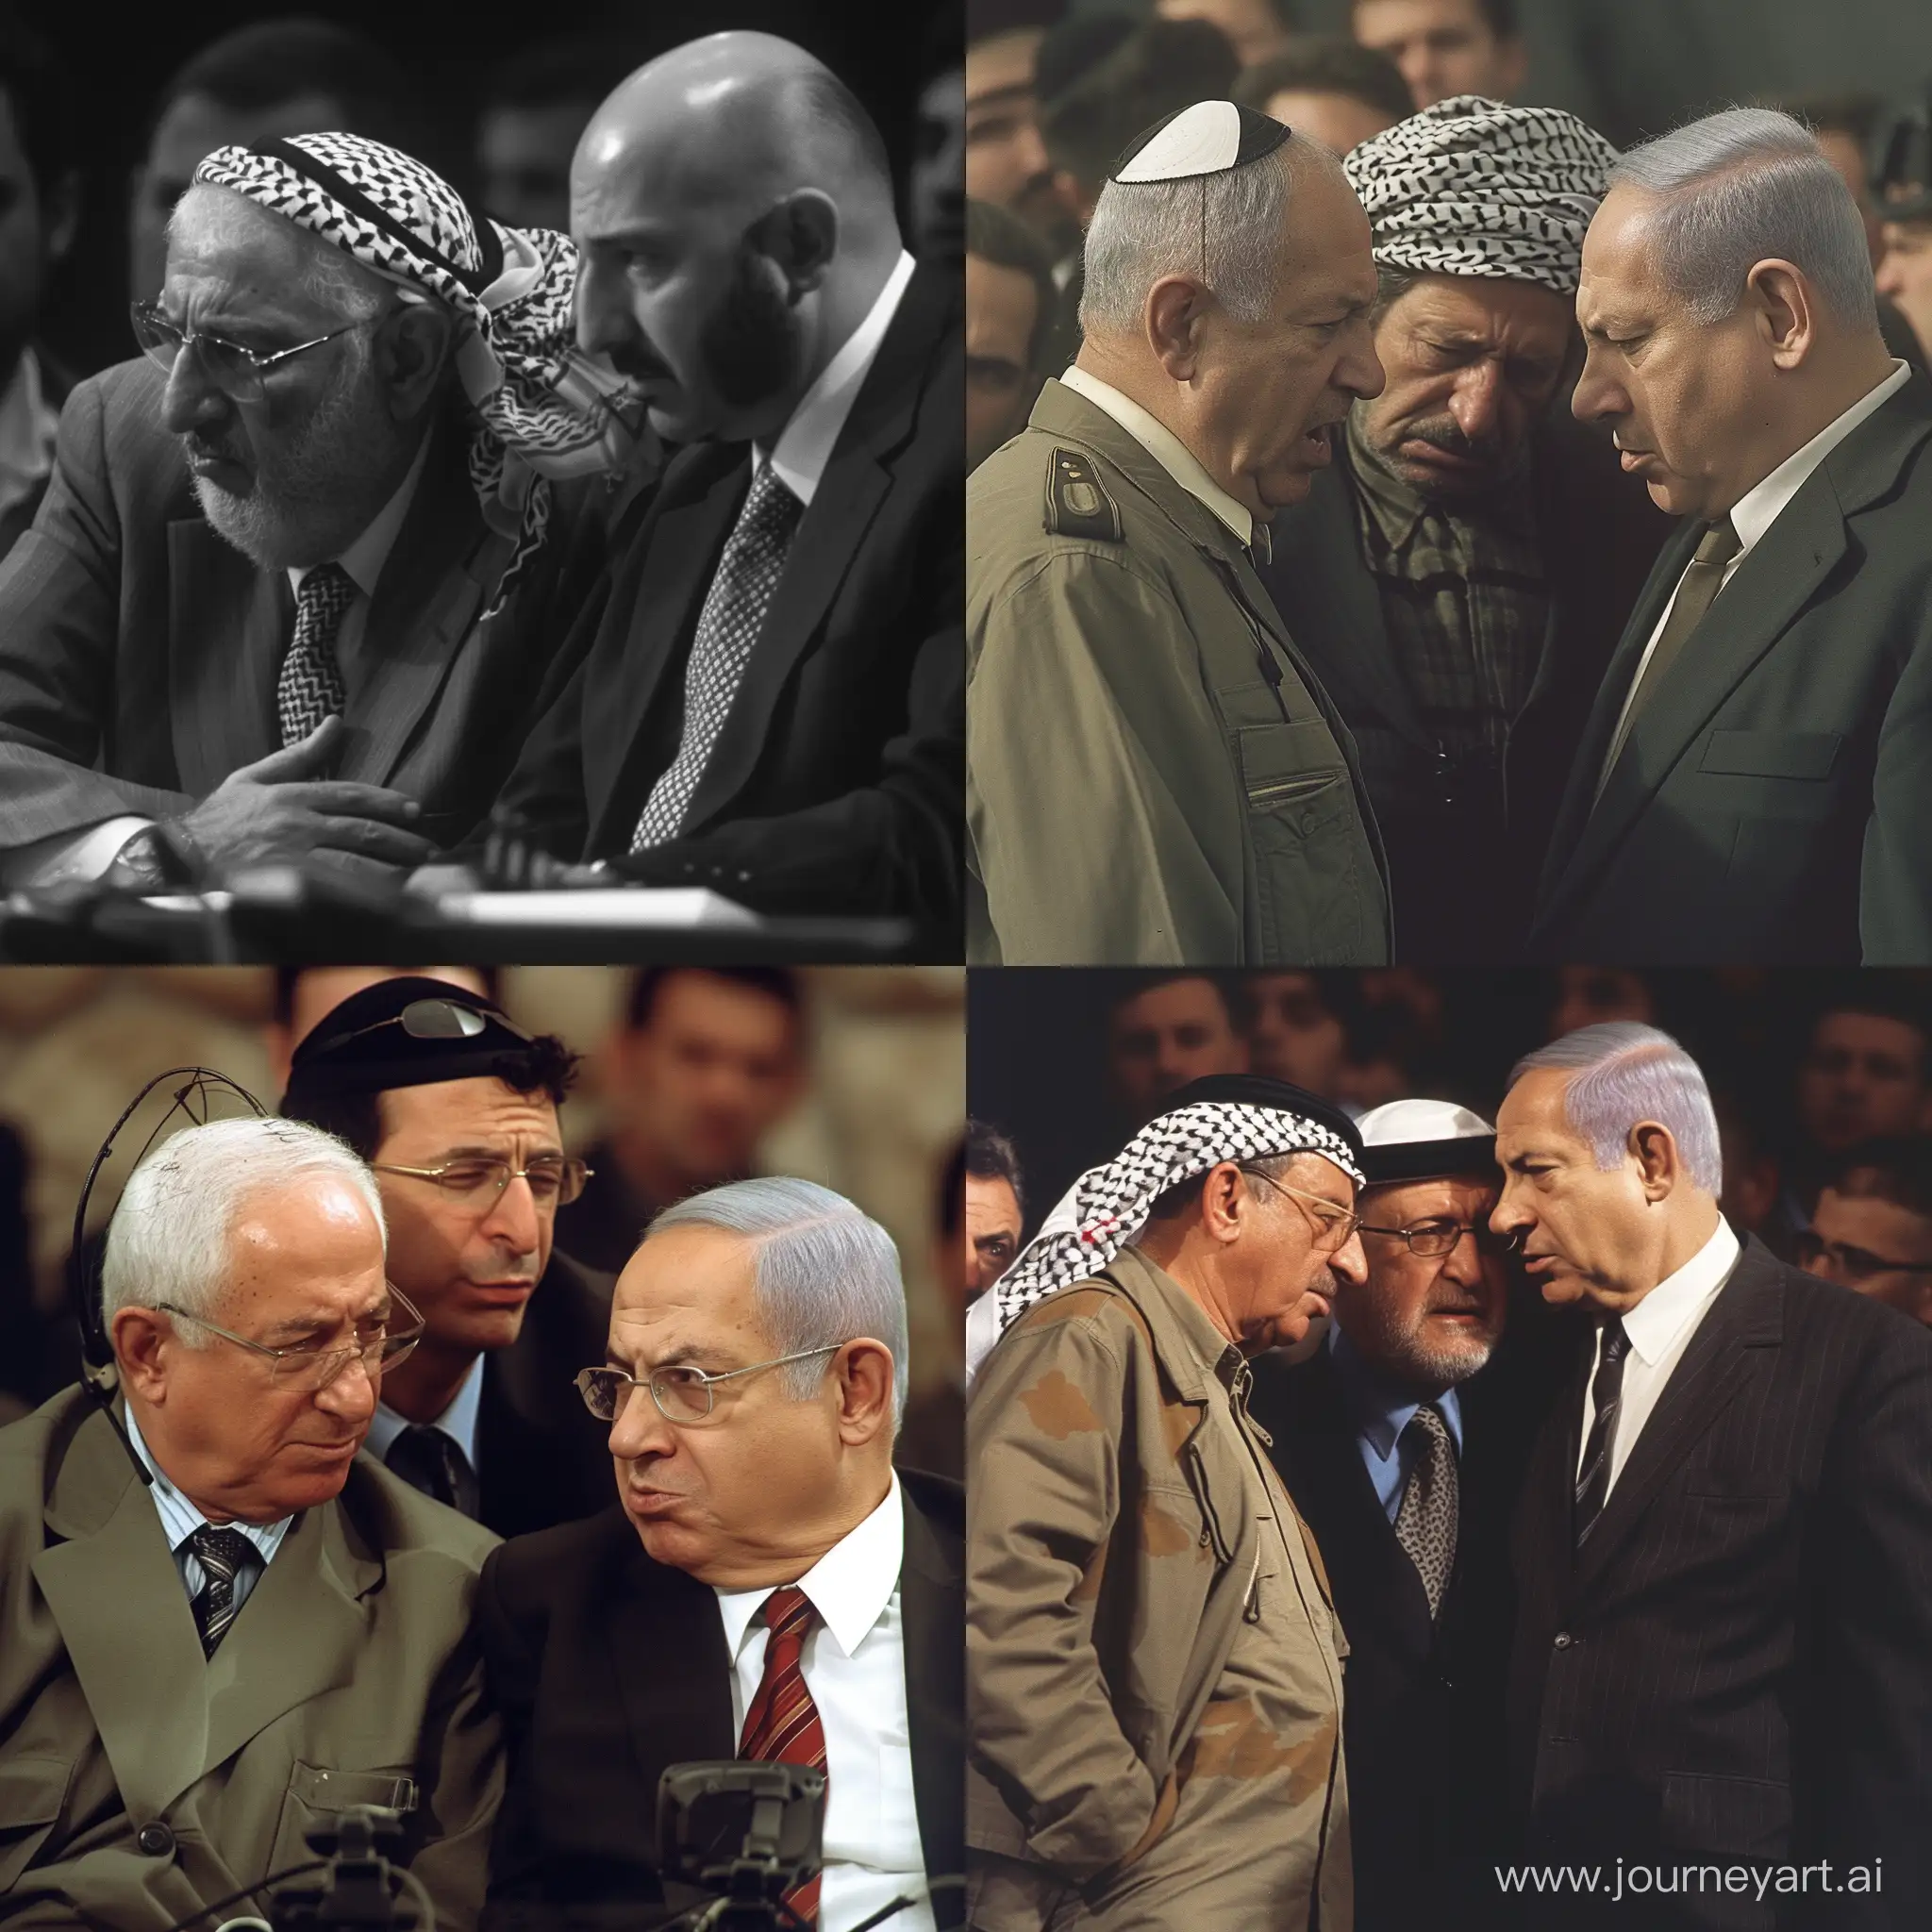 Yitzhak Rabin and Yassir Arafat looking angry and down upon Benjamin Netanyahu.